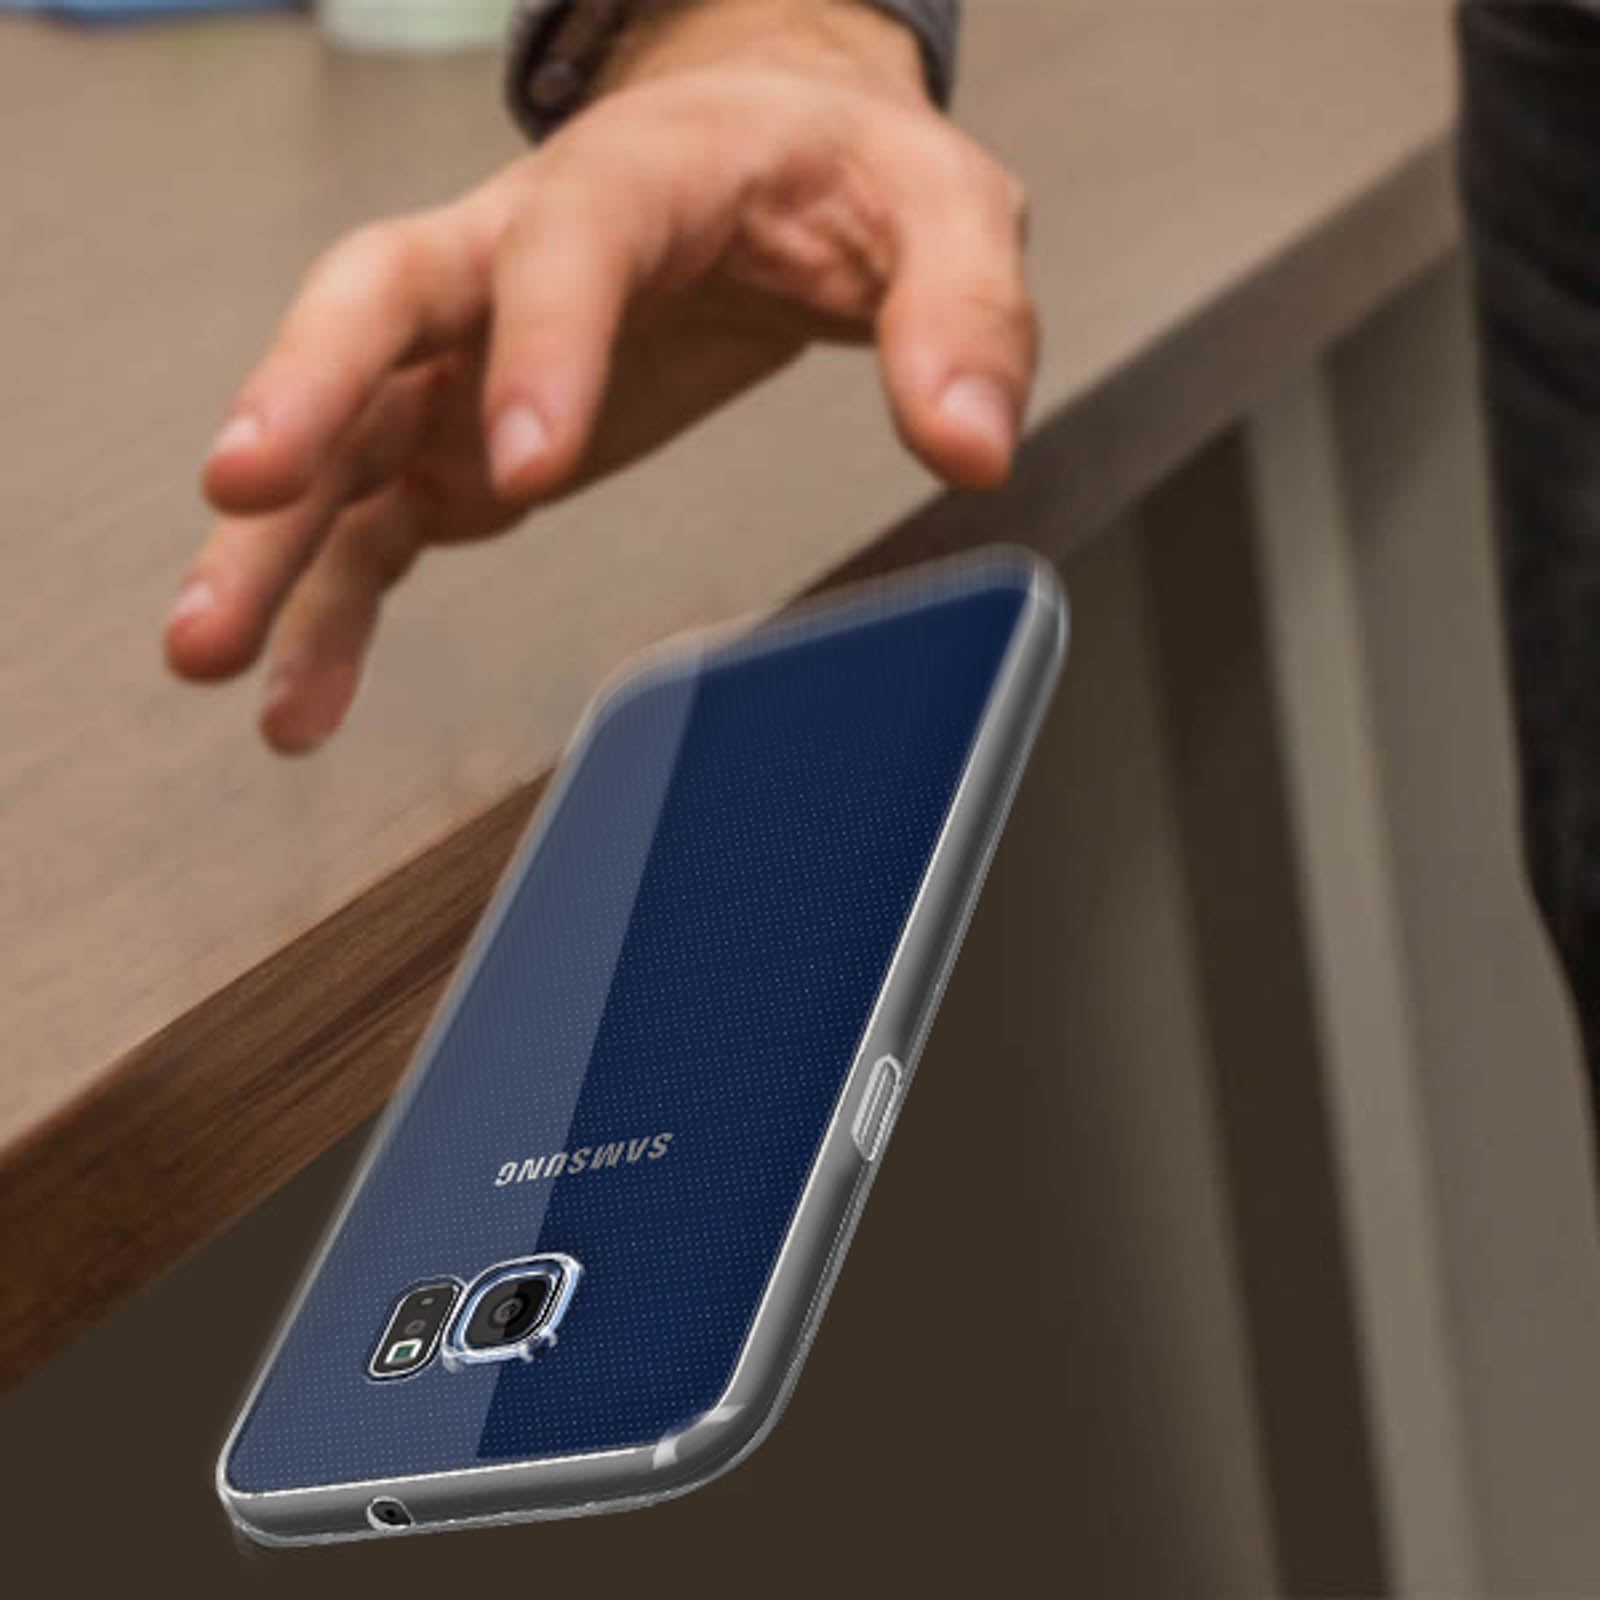 Samsung, Backcover, Edge Transparent S6 Skin Galaxy AVIZAR Plus, Series,